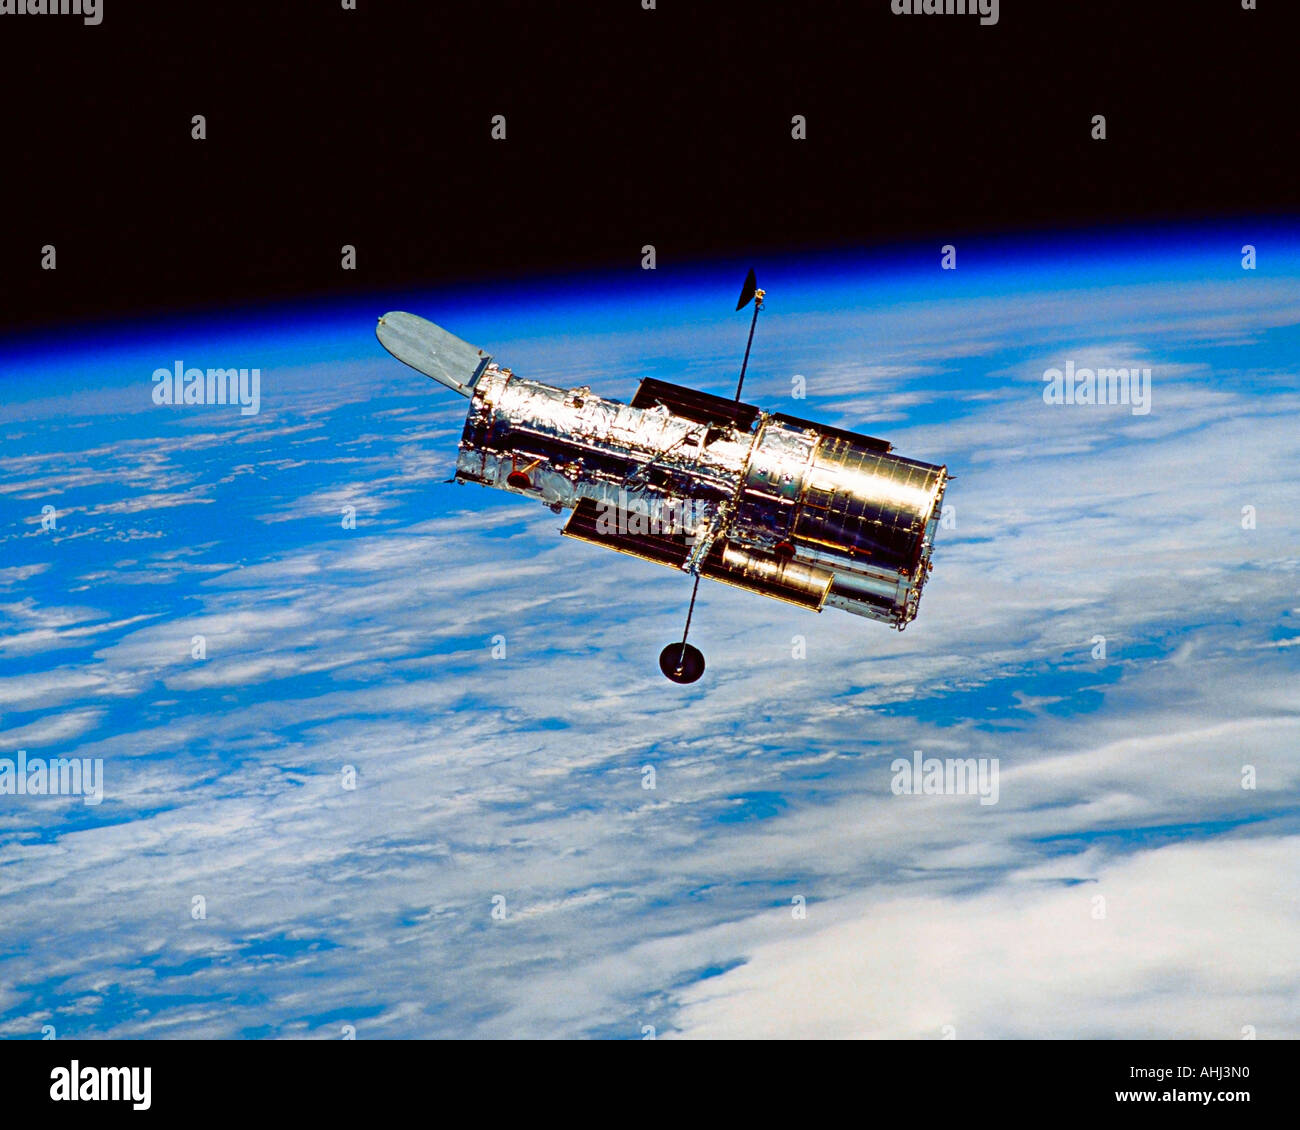 Hubble space telescope in orbit Stock Photo